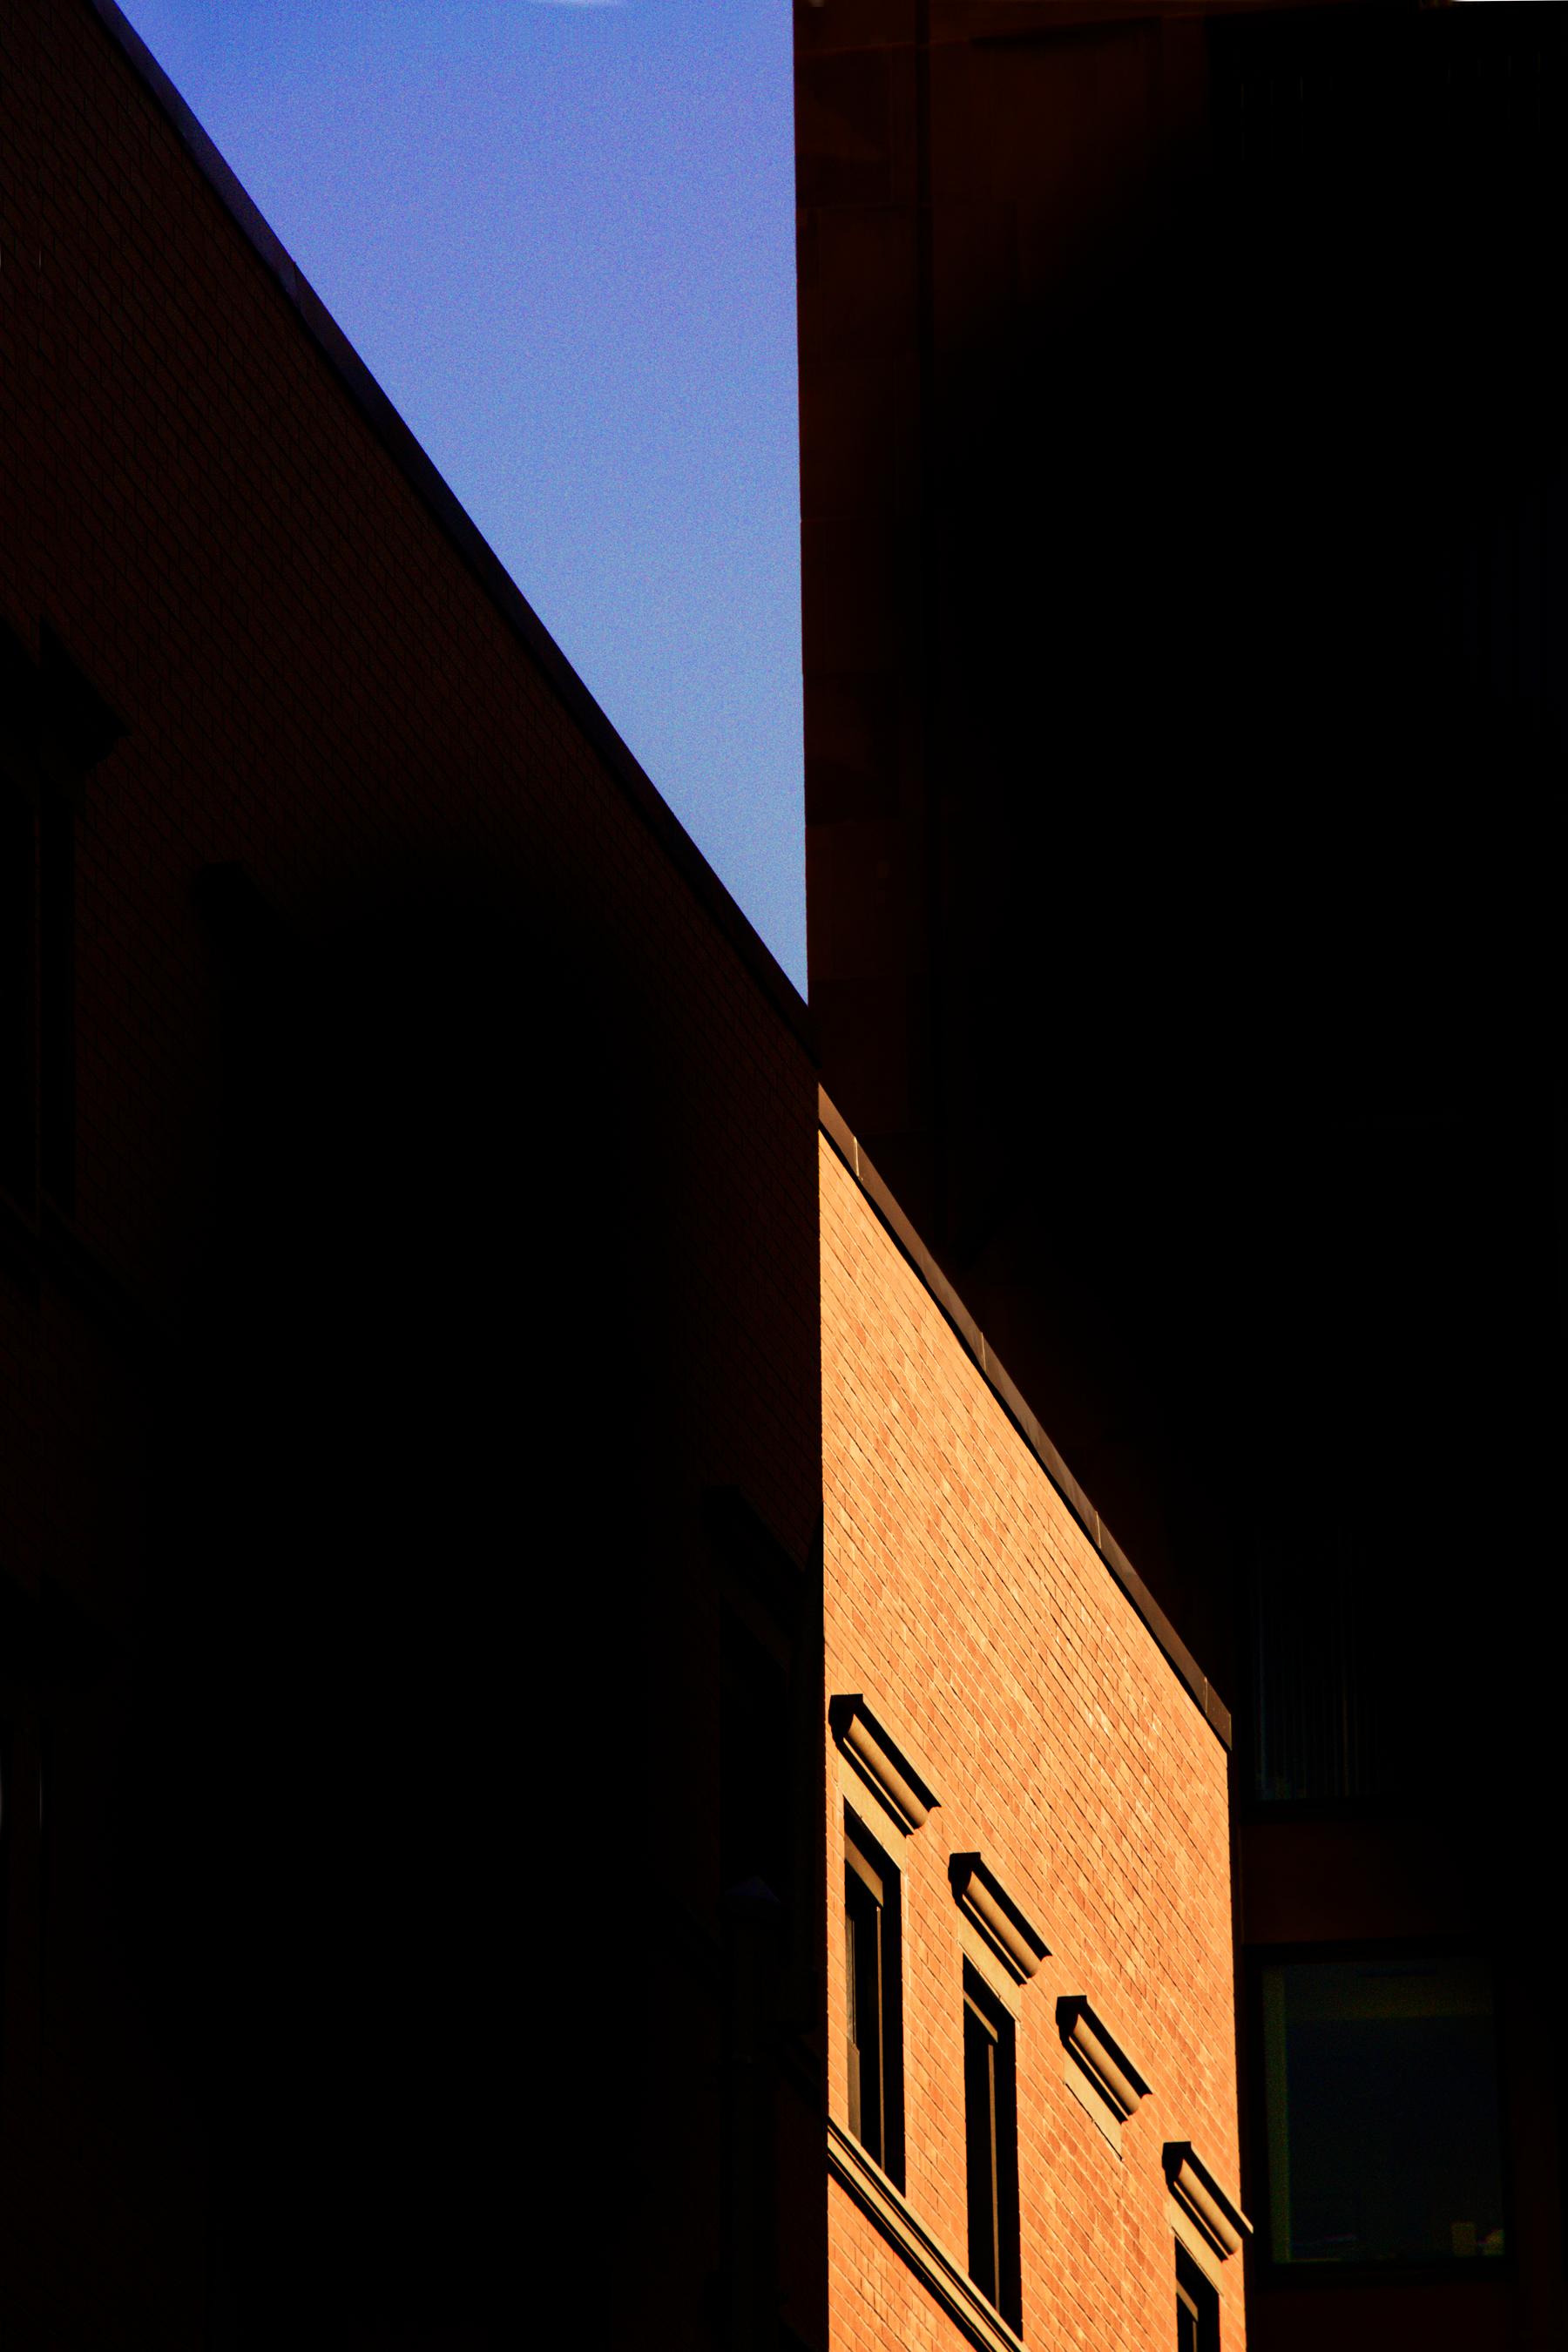 Bob Krasner Color Photograph - "Light, Shadow & Blue Sky", photography, city, architecture, building, geometry